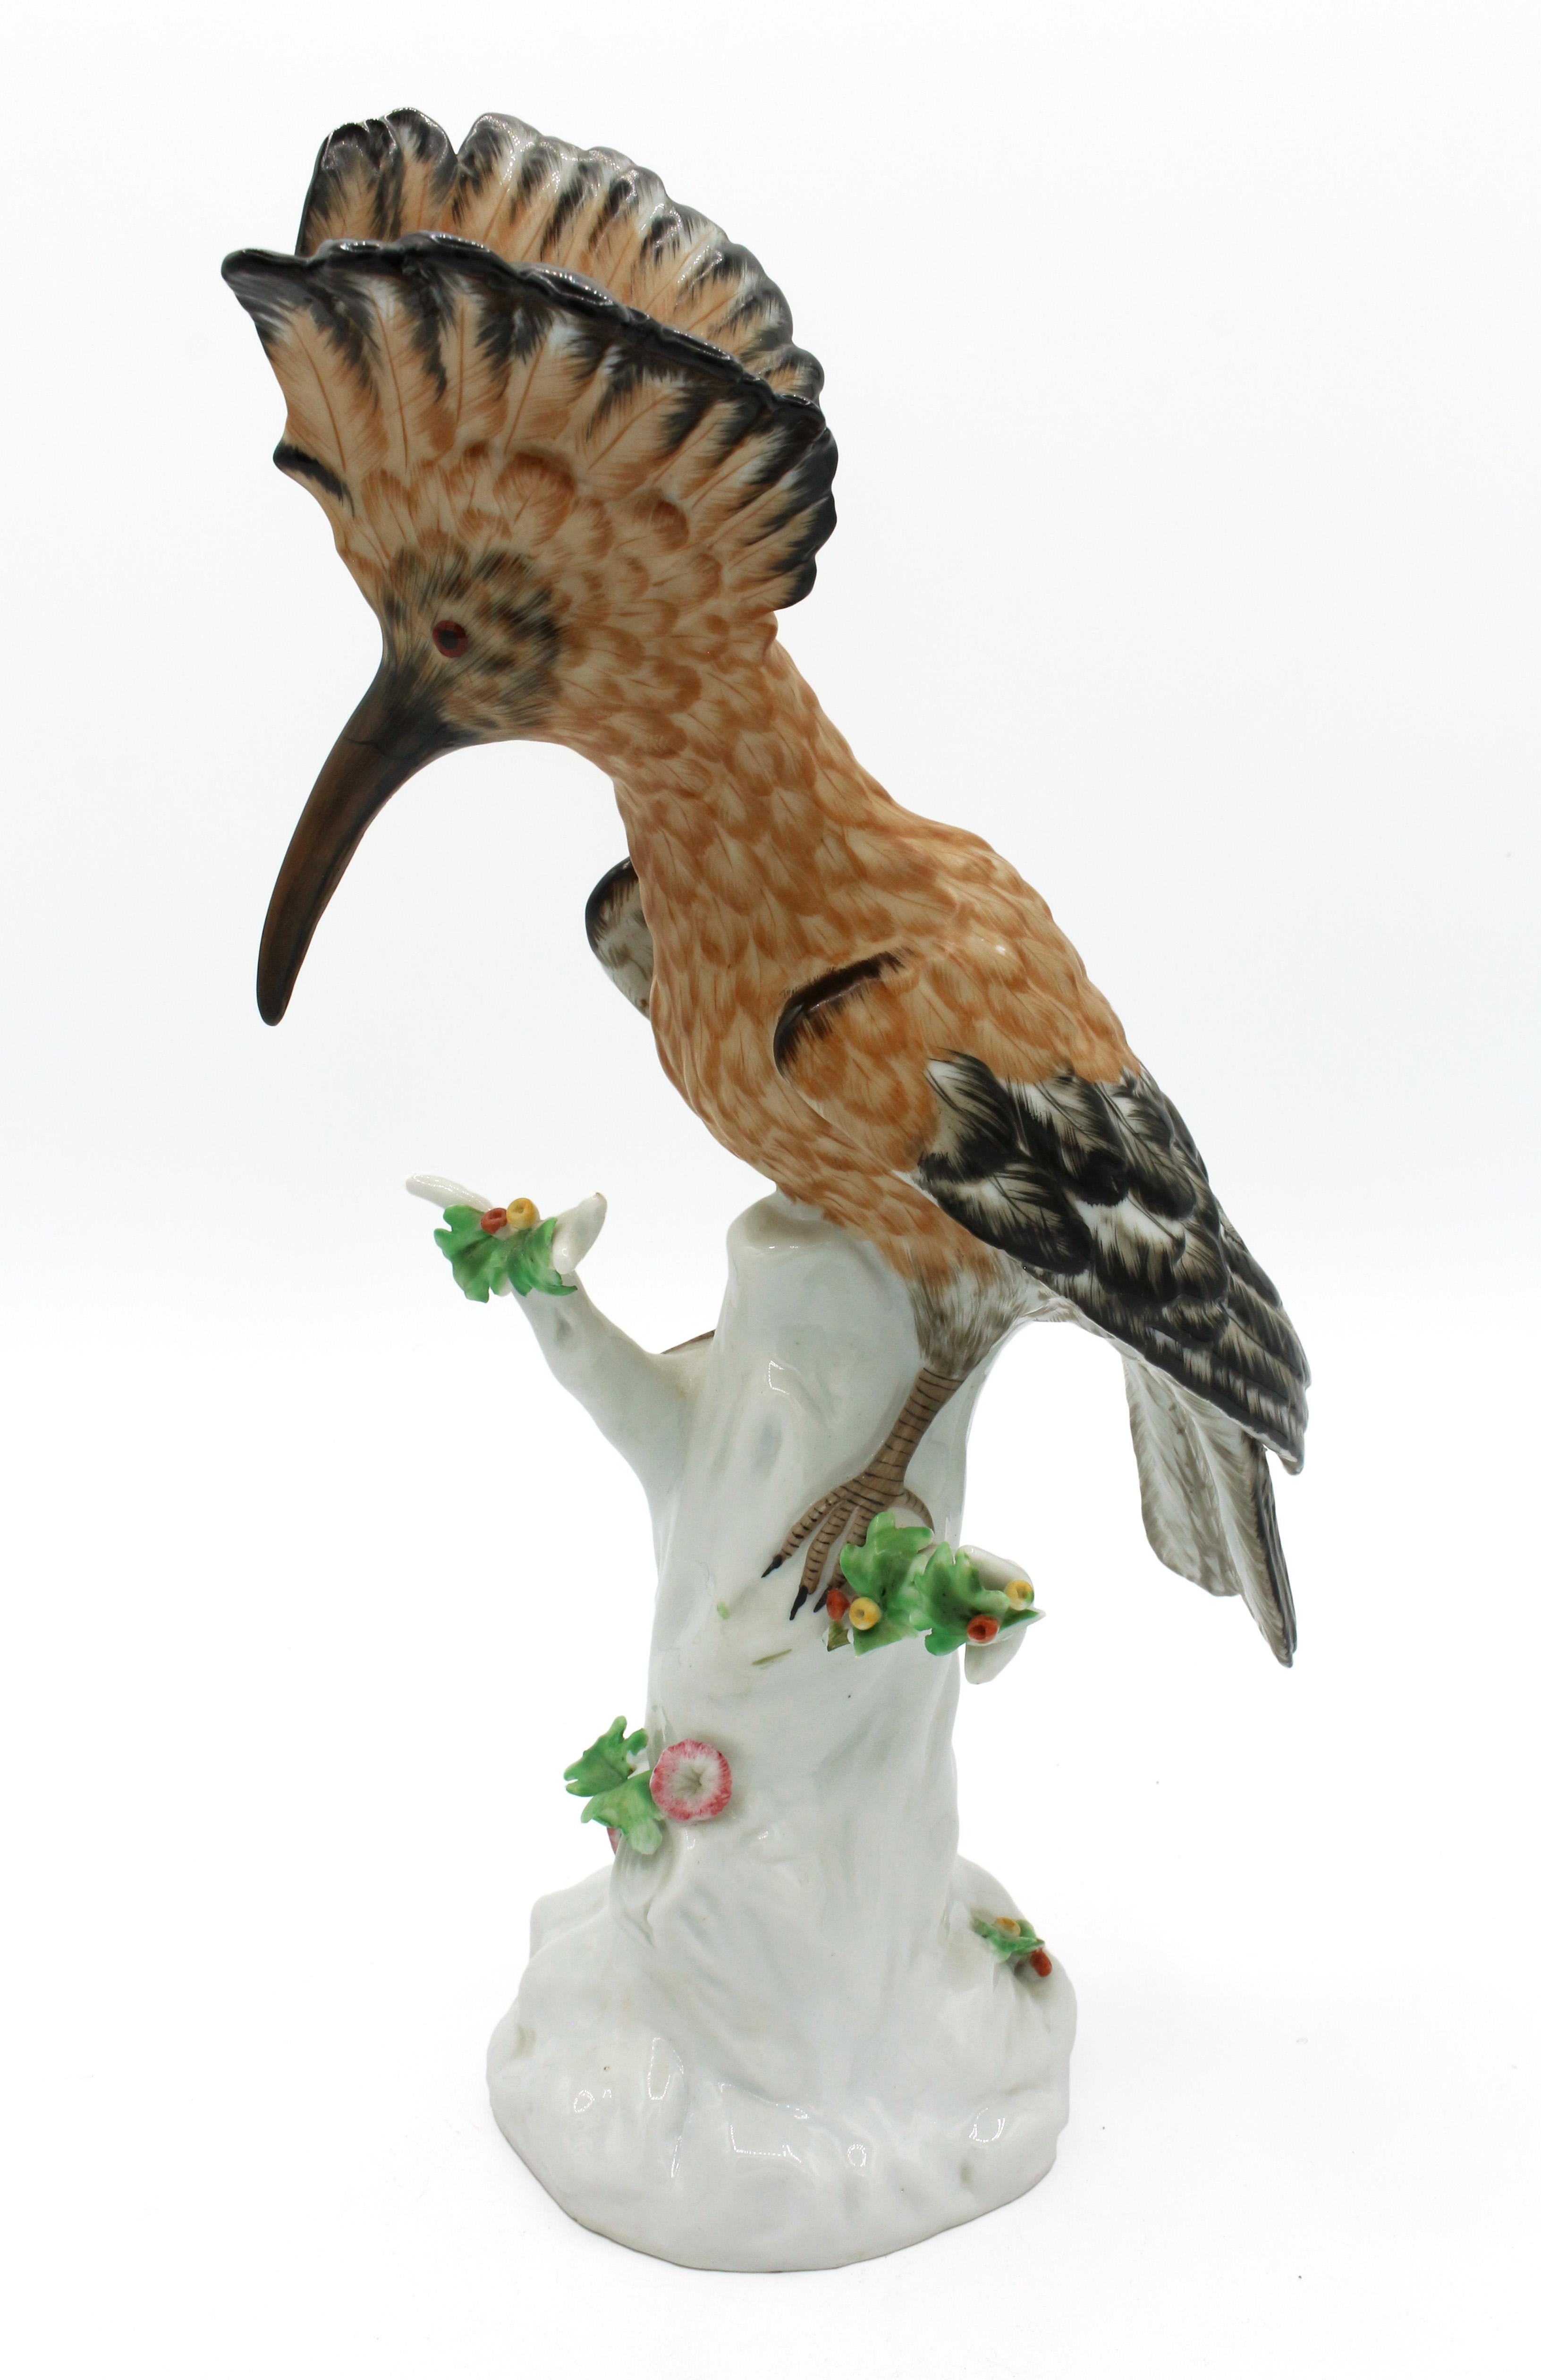 Mid-20th century Italian porcelain hoopoe bird figurine. Marked 